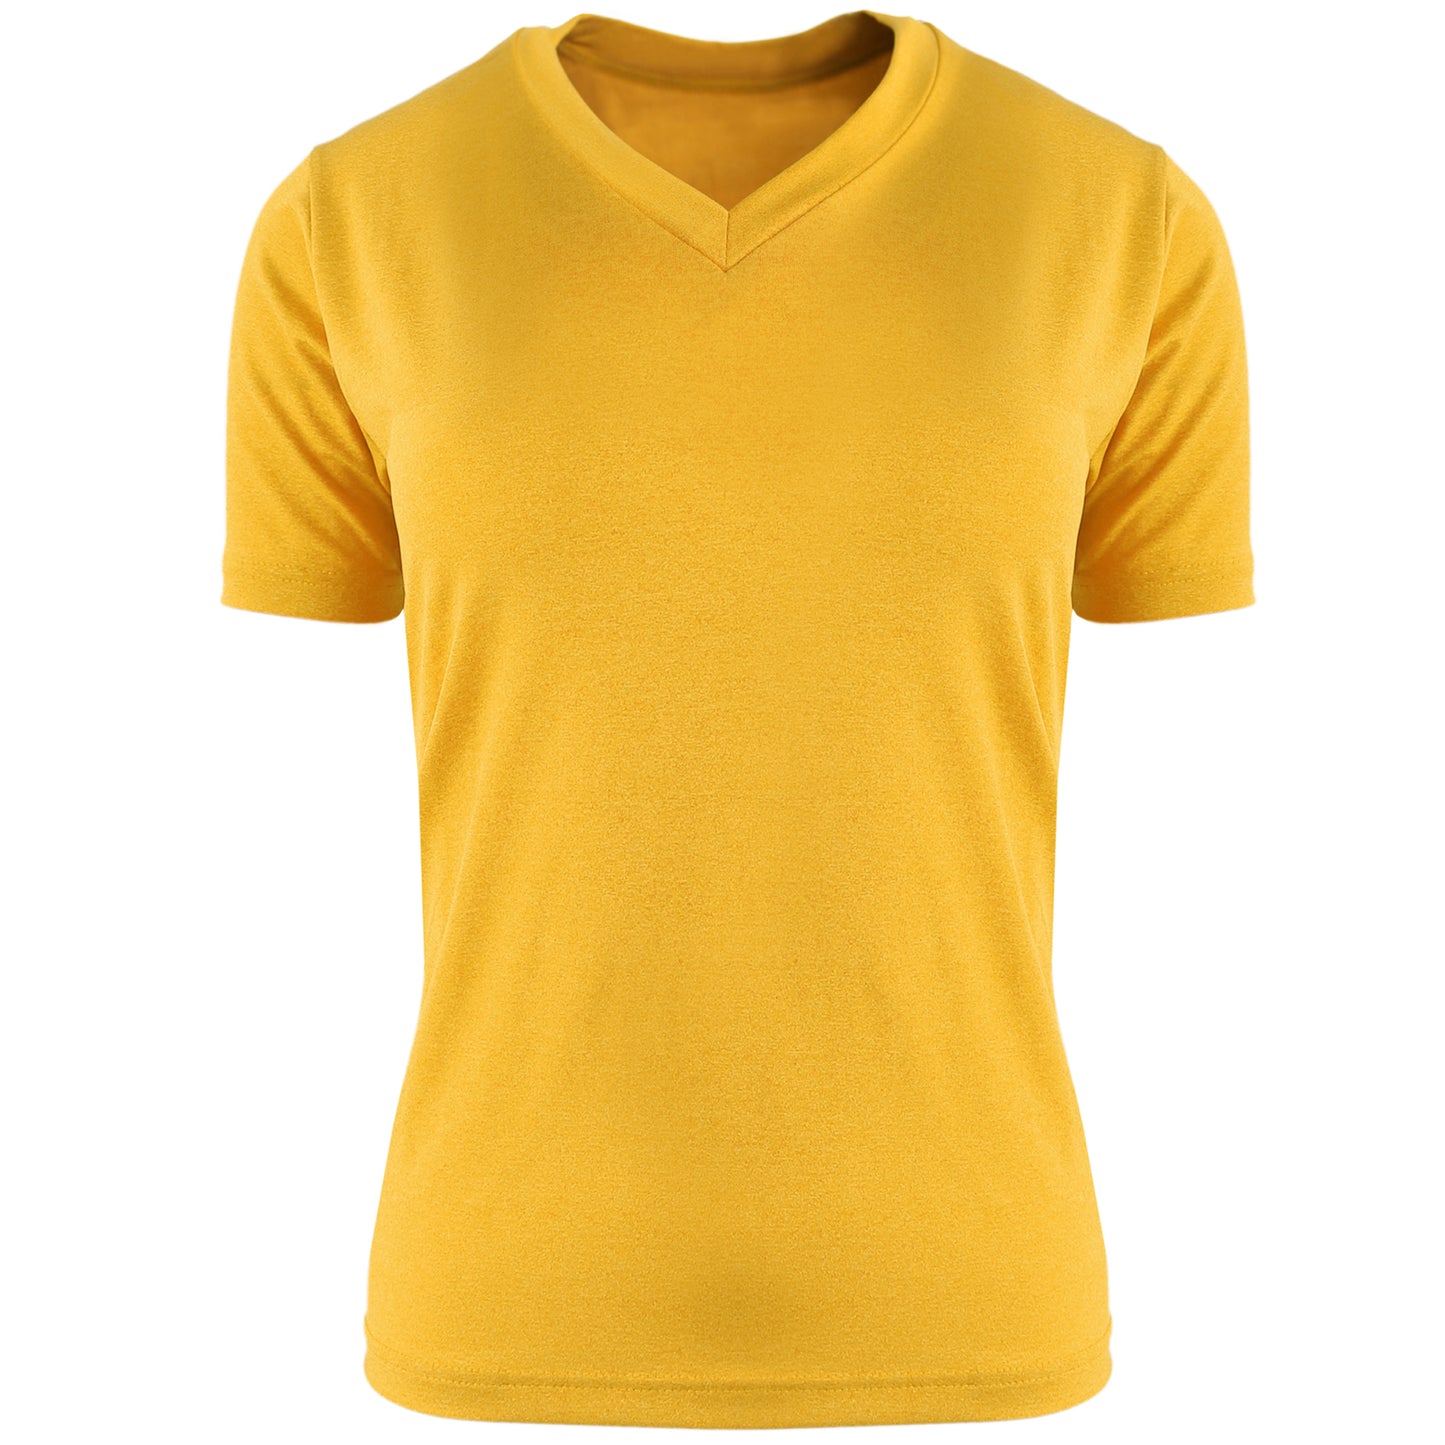 Classic V Neck Dri Short Sleeve T Shirts for Women(7colors)